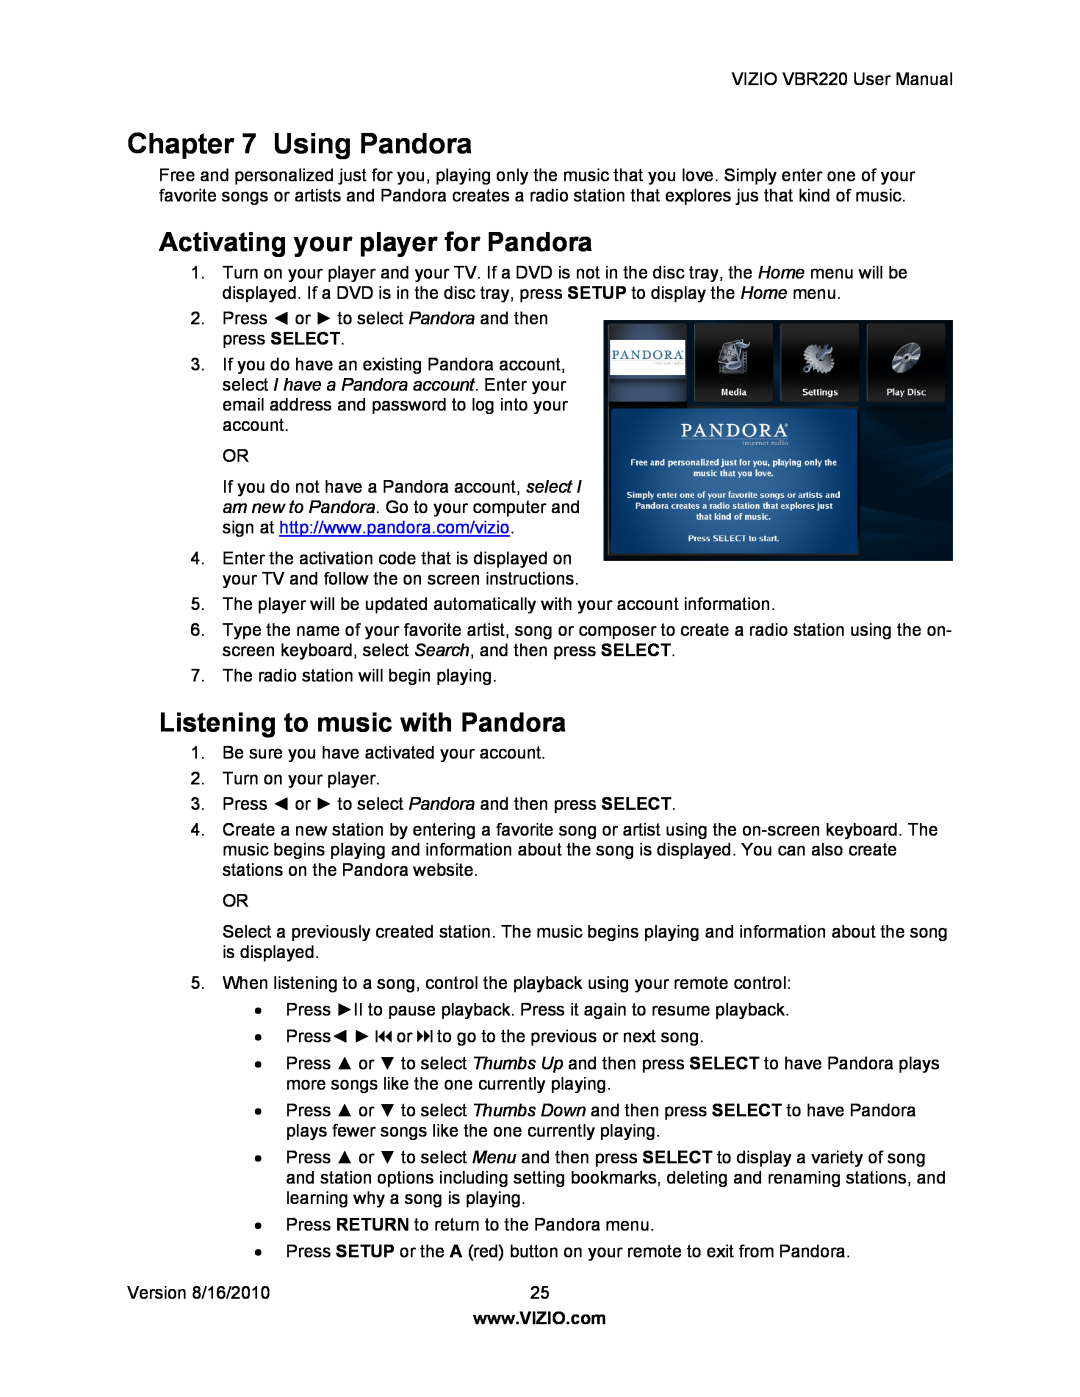 Panasonic VBR220 user manual Using Pandora, Activating your player for Pandora, Listening to music with Pandora 